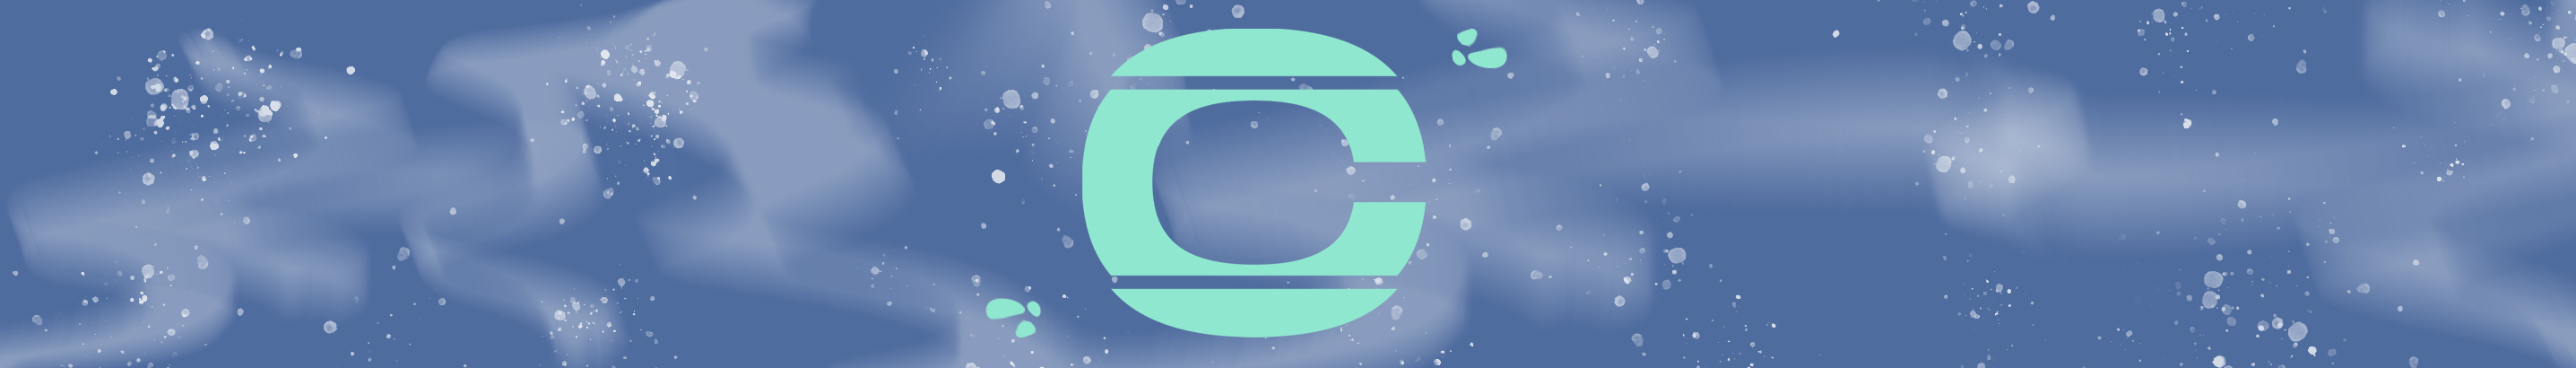 cst design's profile banner